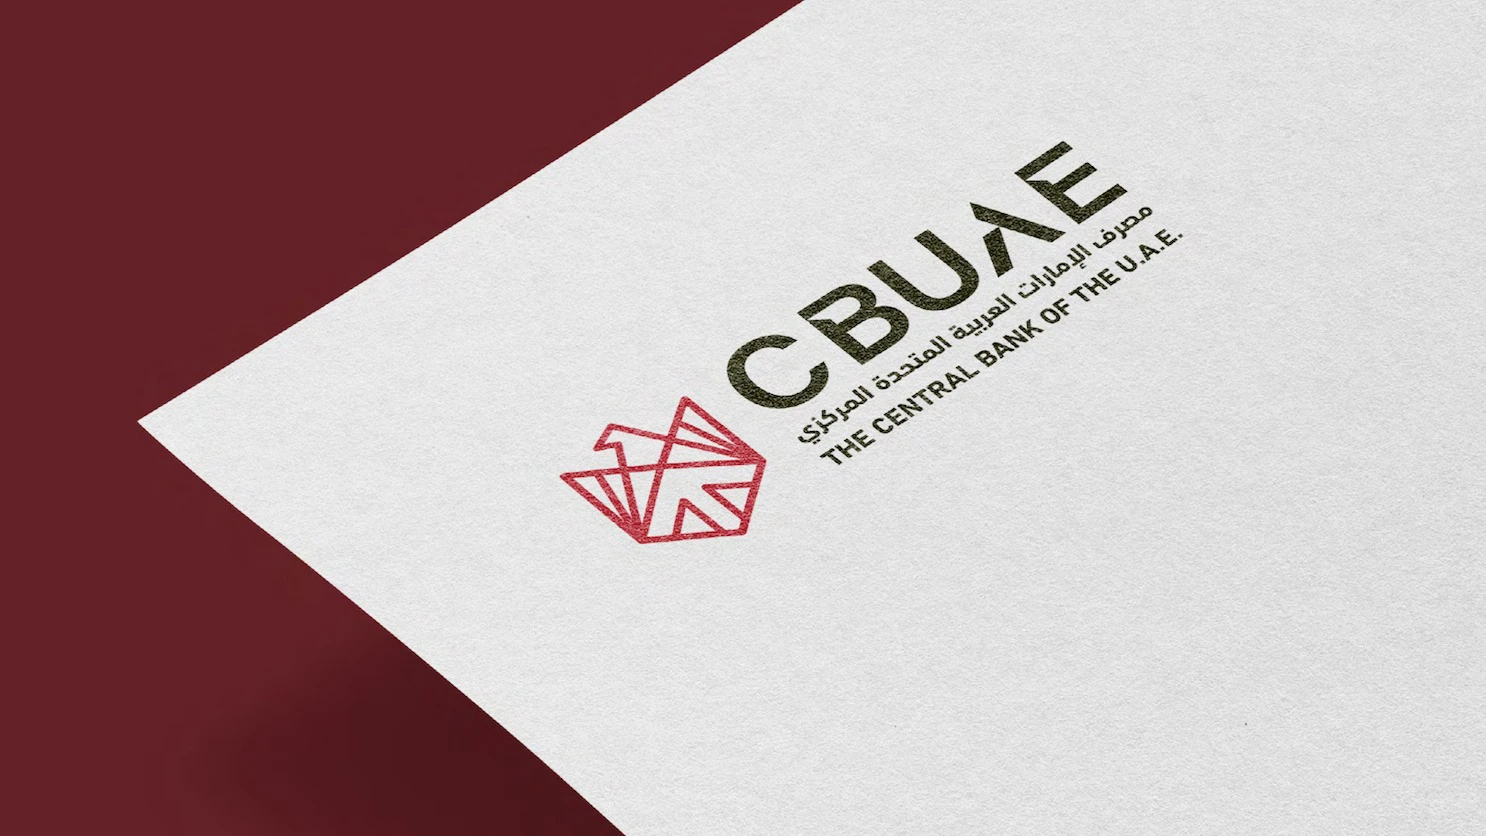 central bank of uae - branding proposal - banner